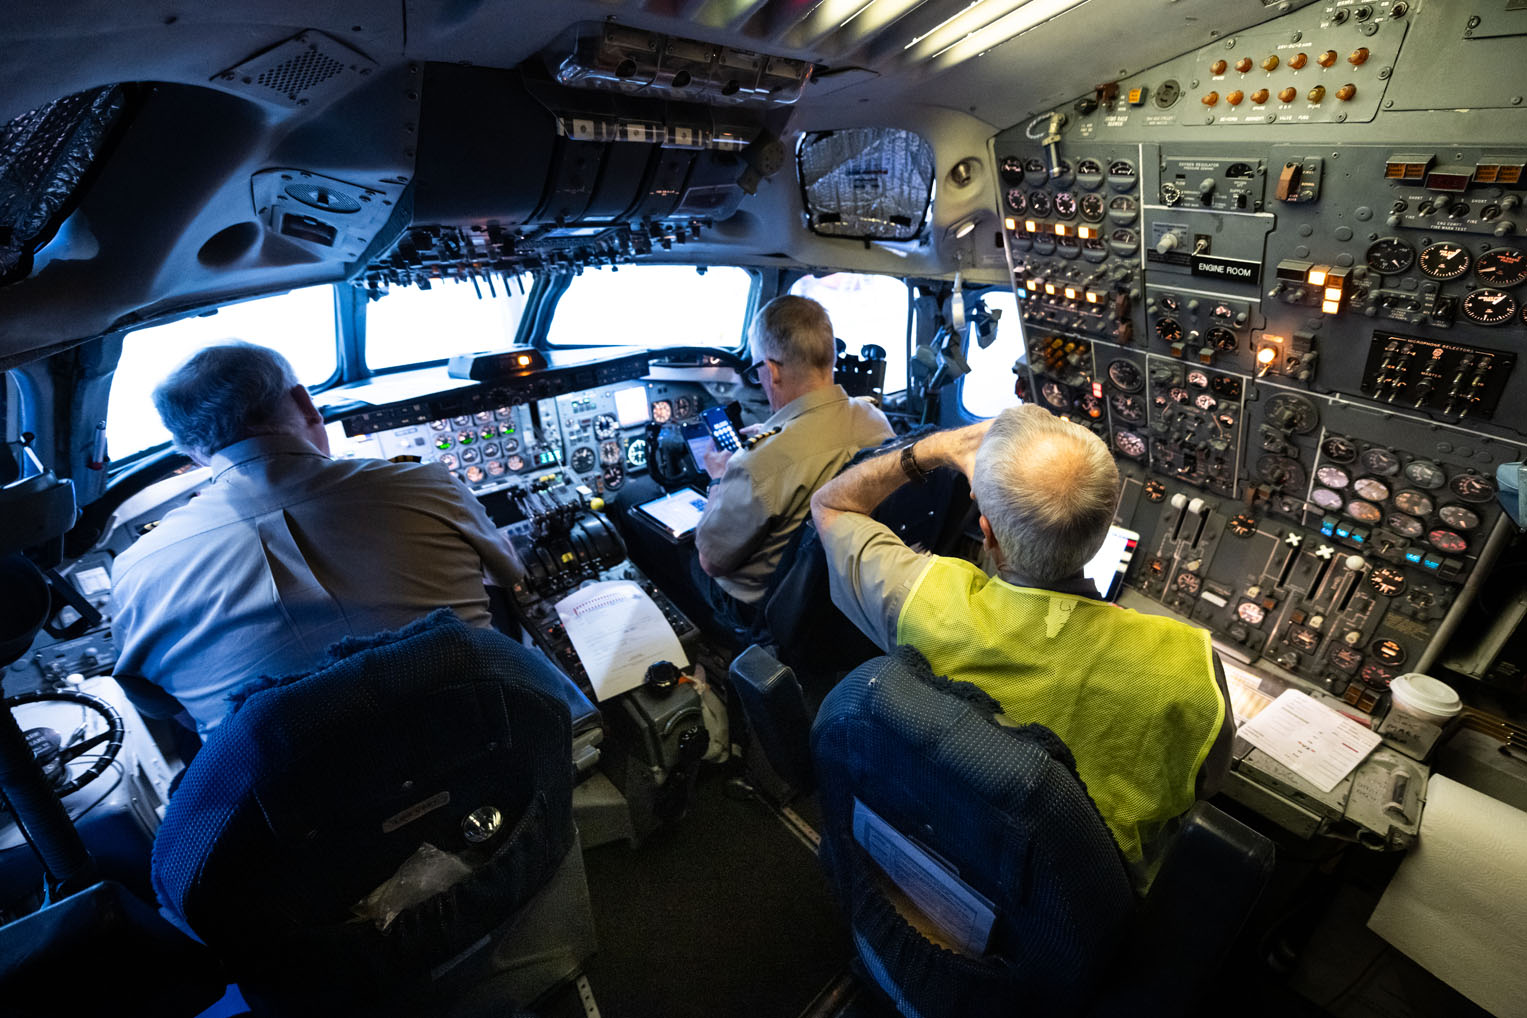 The flight crew readies the DC-8 for departure.